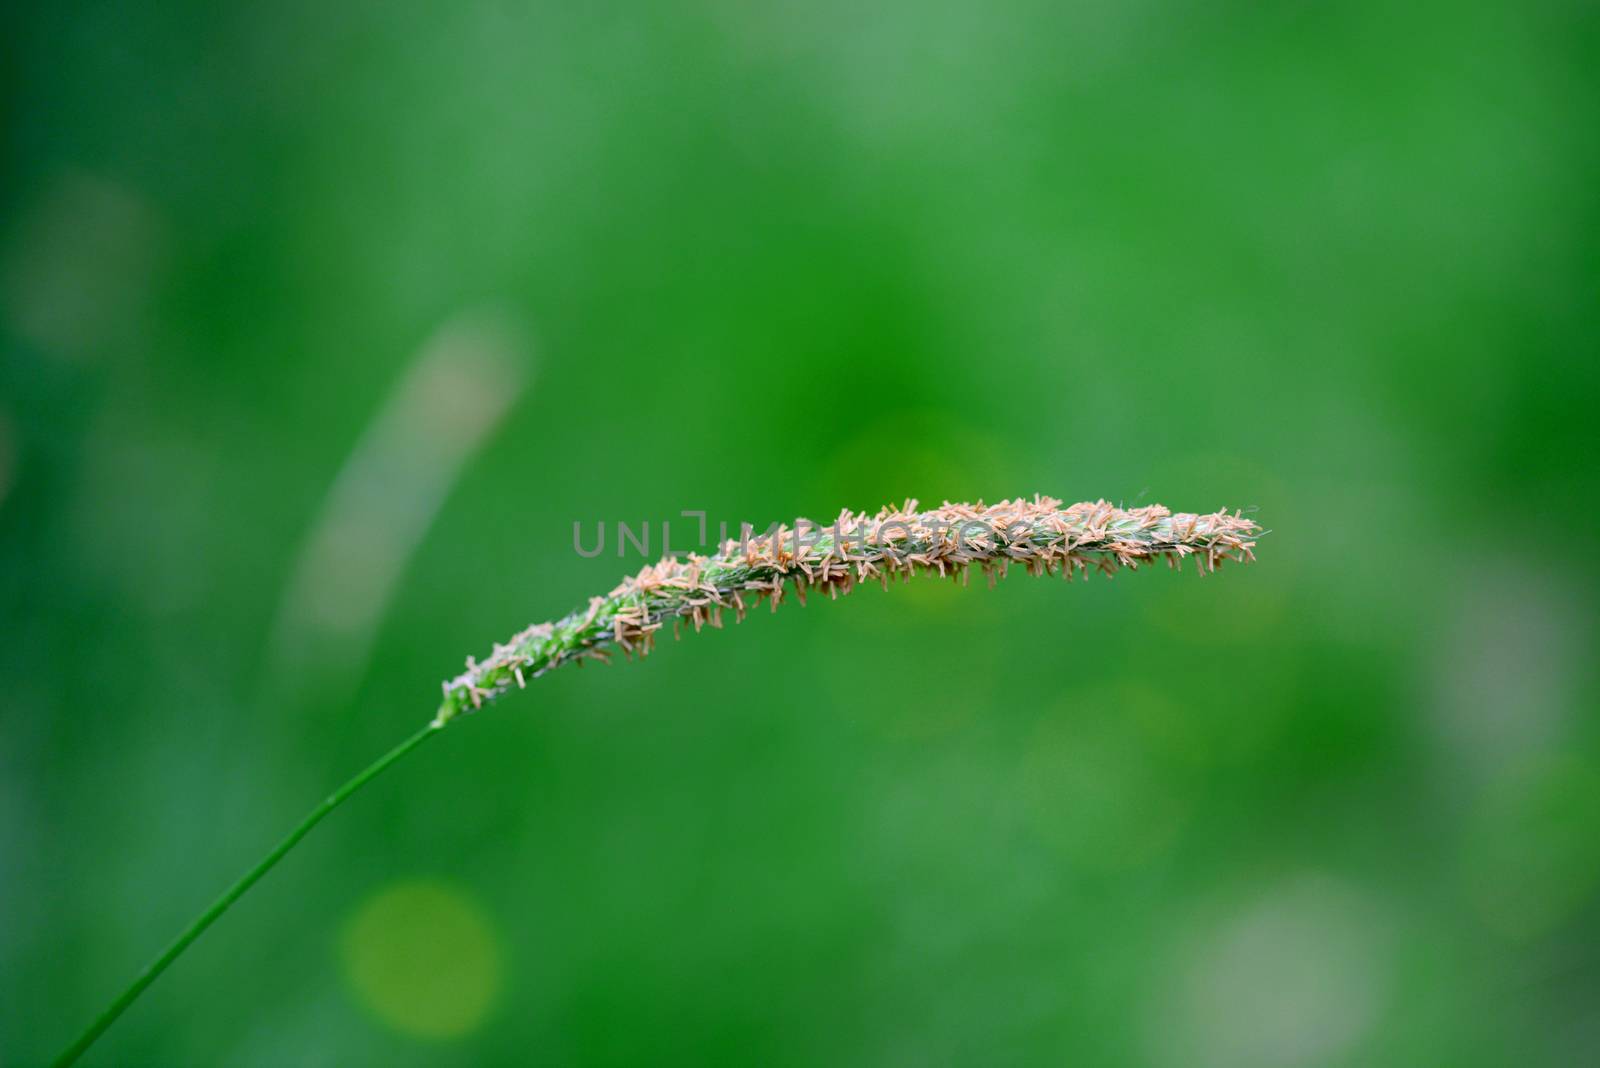 Tall Grass Seed by tony4urban